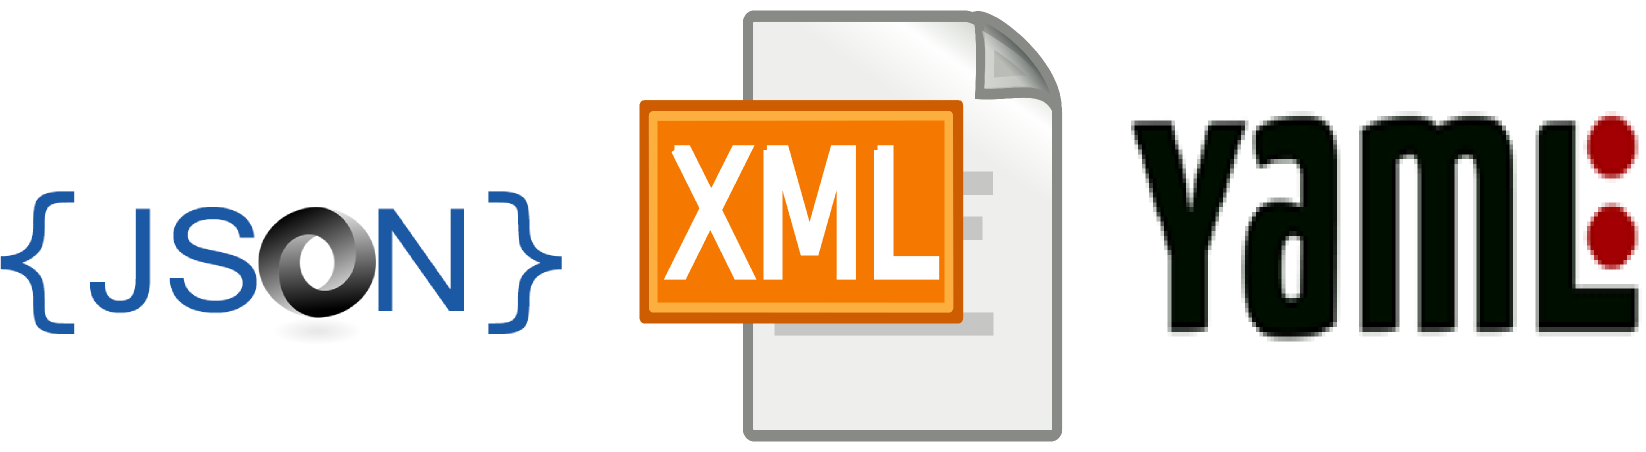 Introduction to JSON XML & YAML